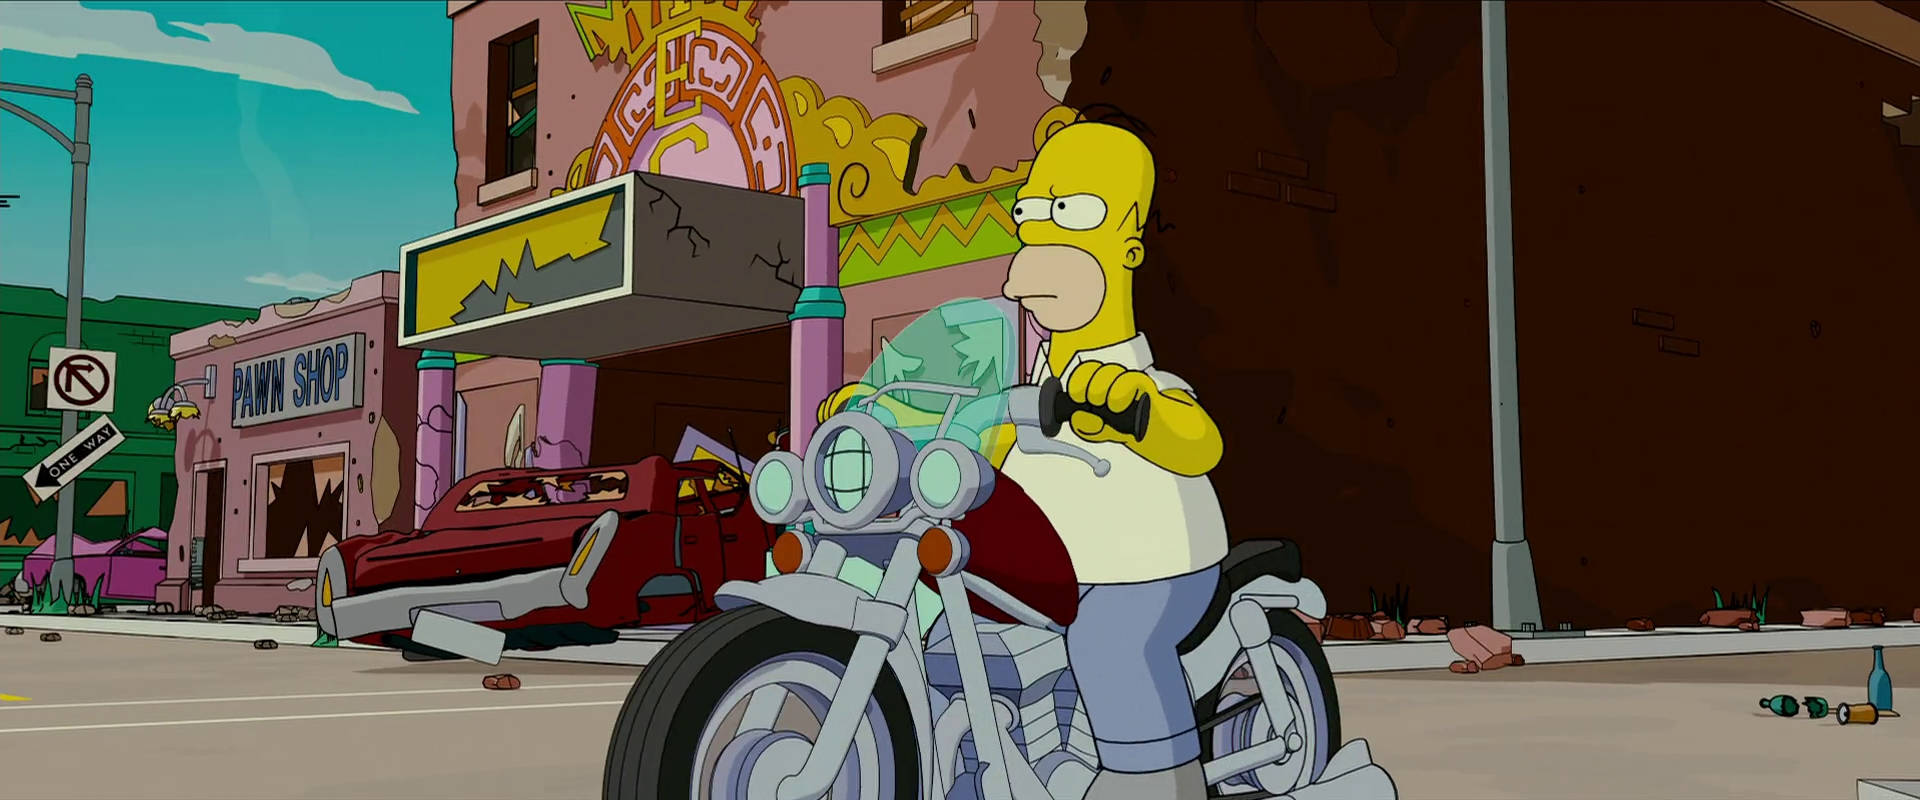 Homer Simpsons On Motorcycle The Simpsons Movie Wallpaper